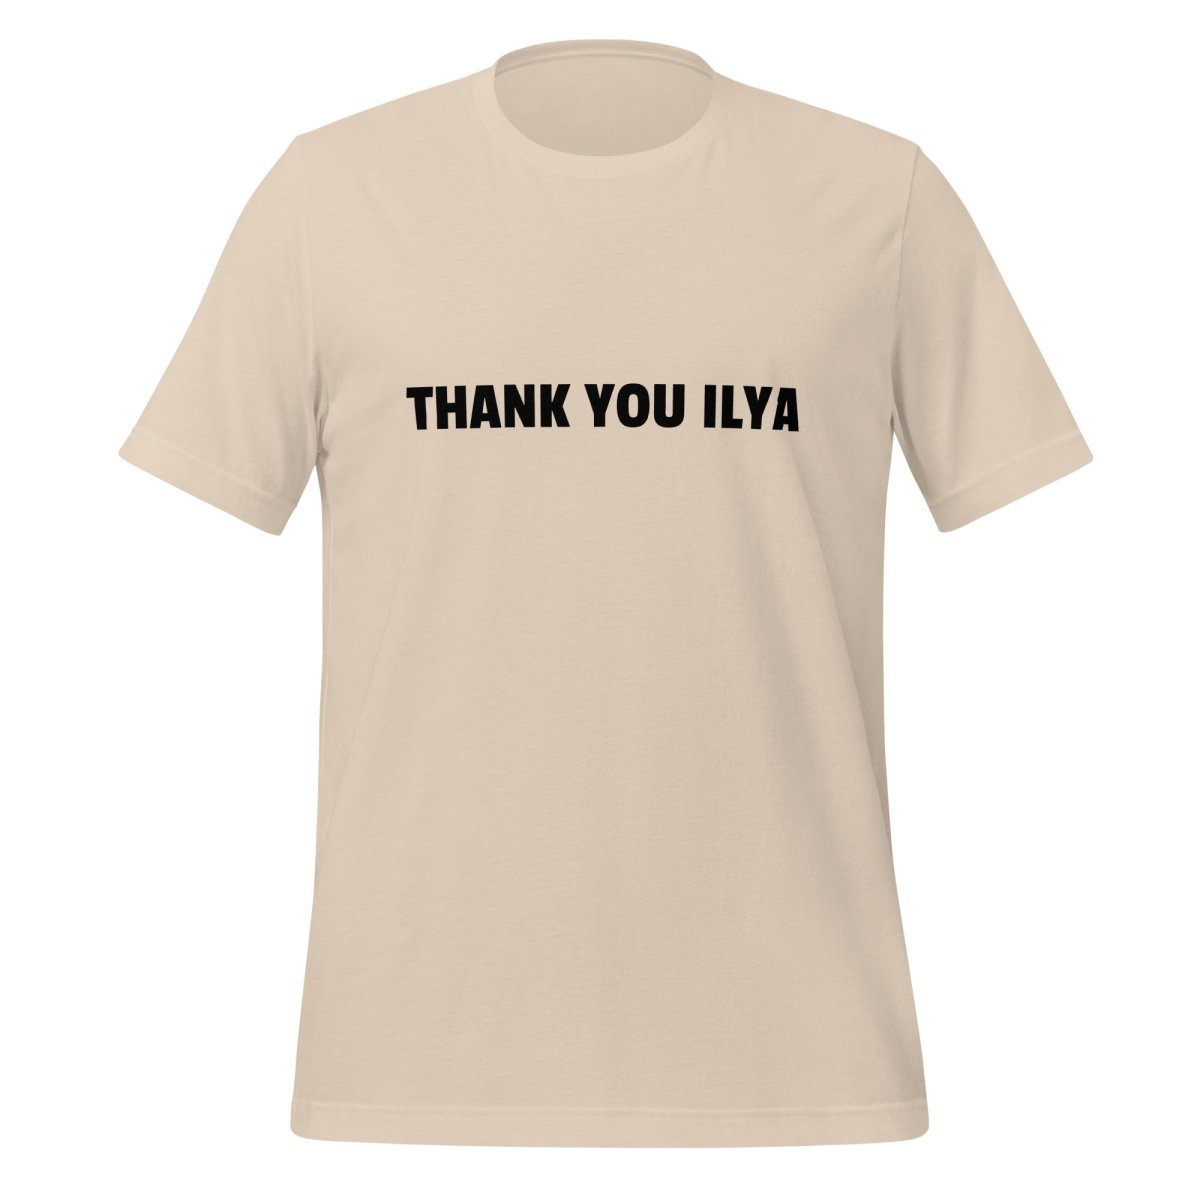 THANK YOU ILYA T - Shirt (unisex) - Soft Cream - AI Store